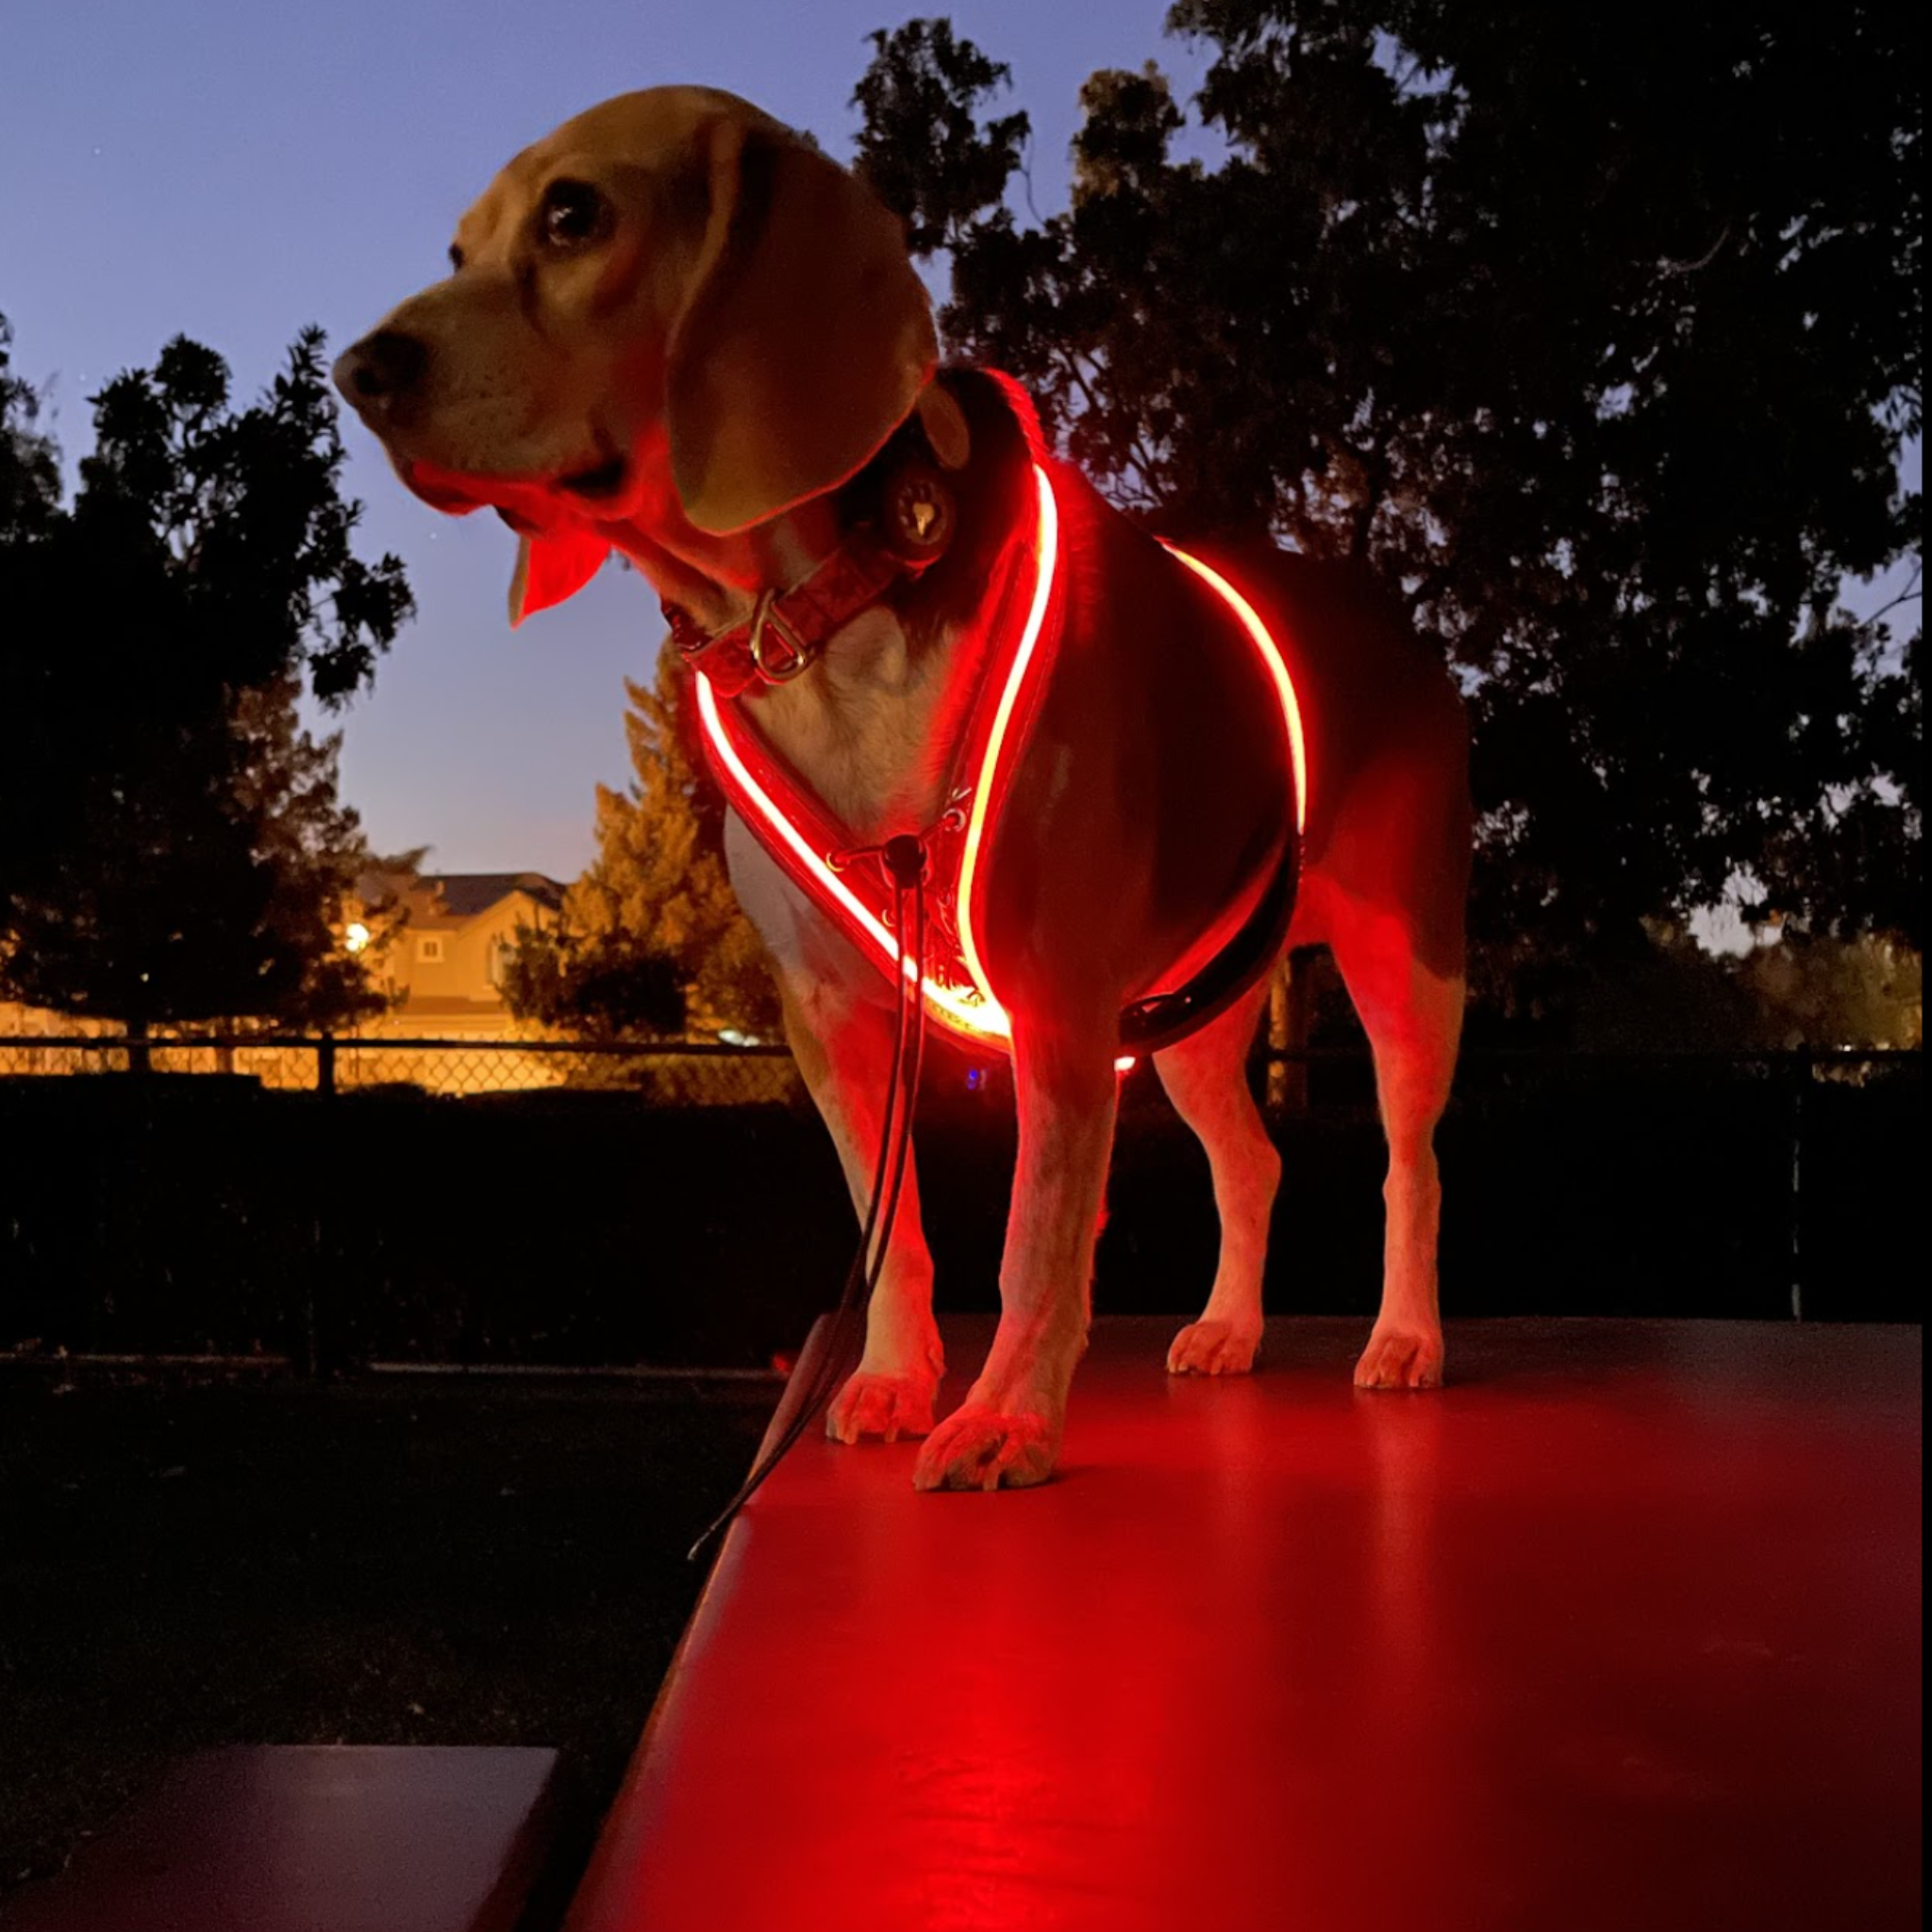 Light Active® Dog Harness